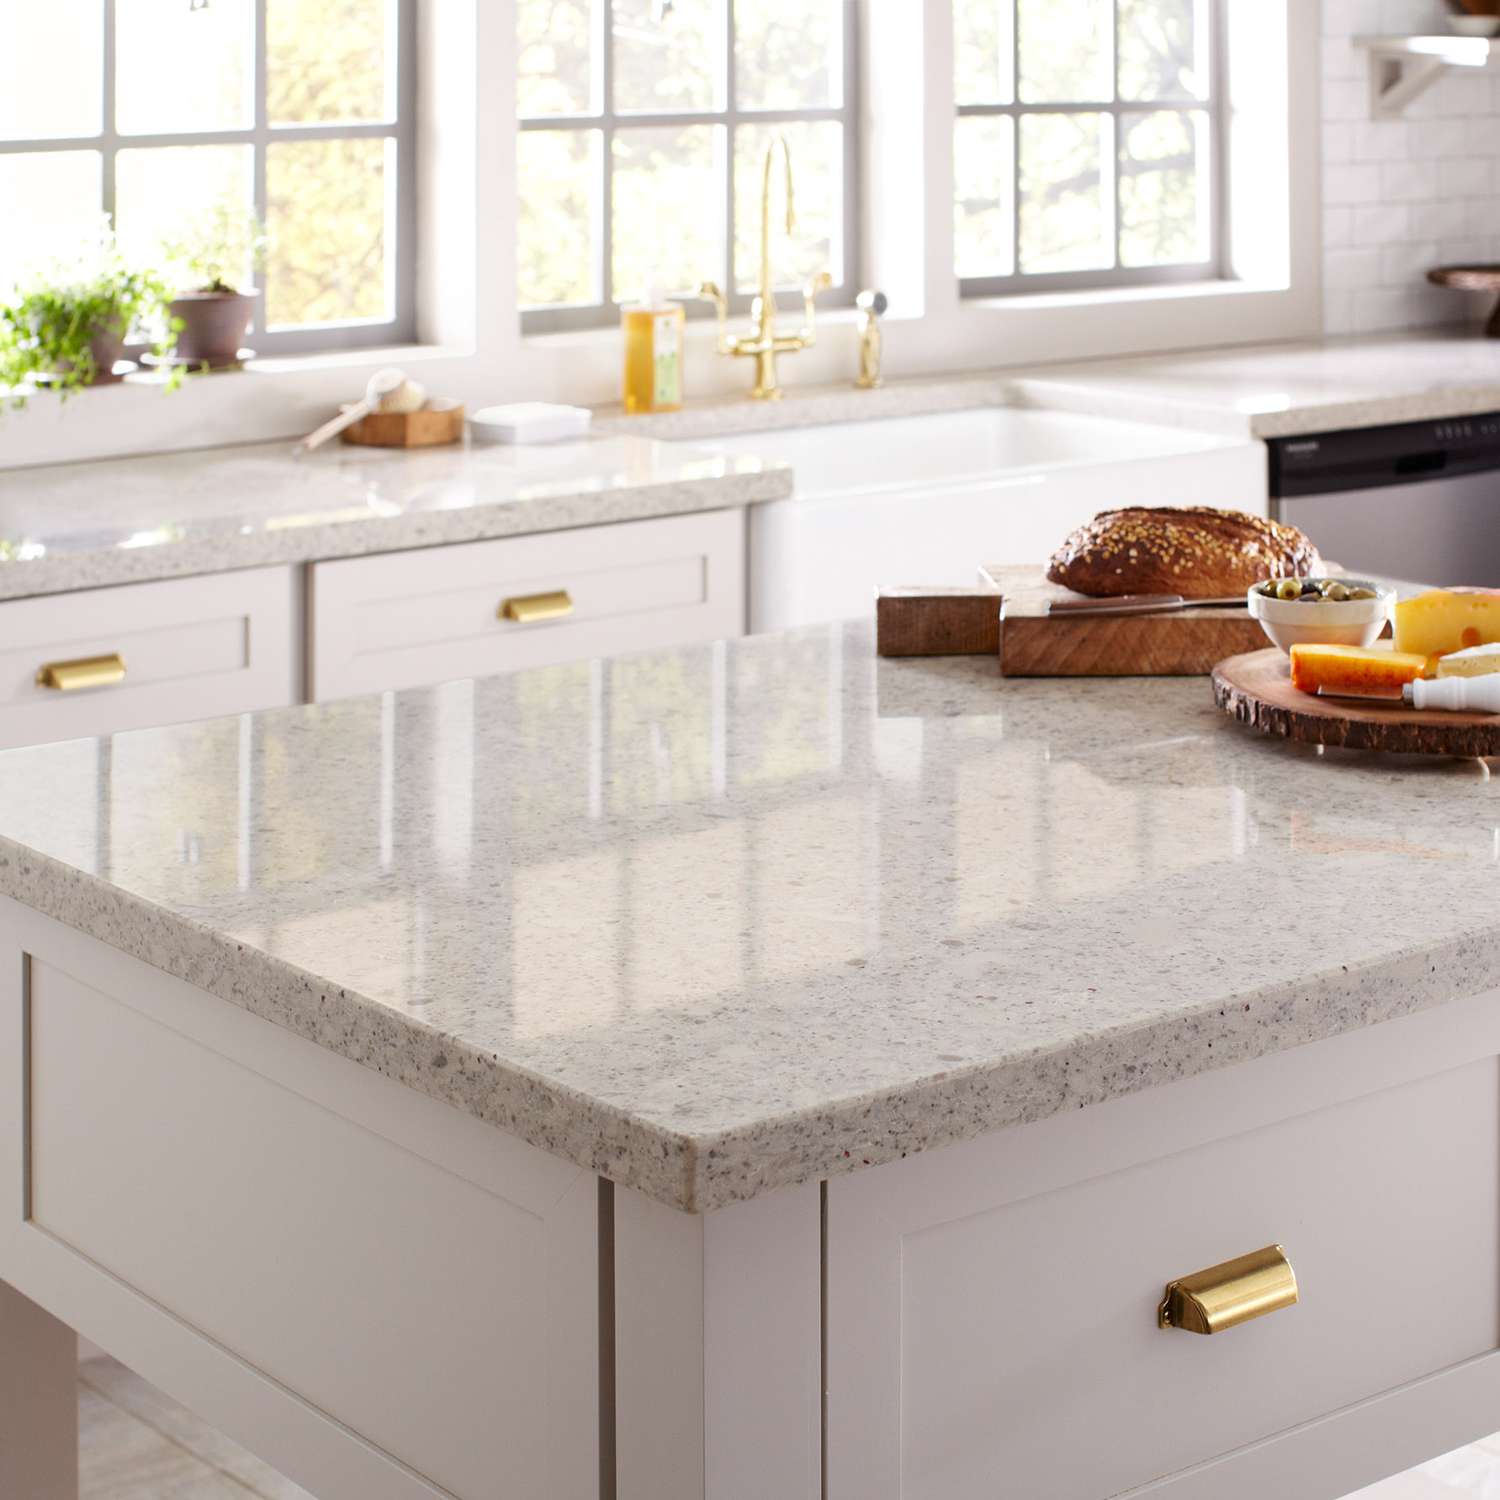 How To Choose Between Quartz Or Granite Kitchen Countertops